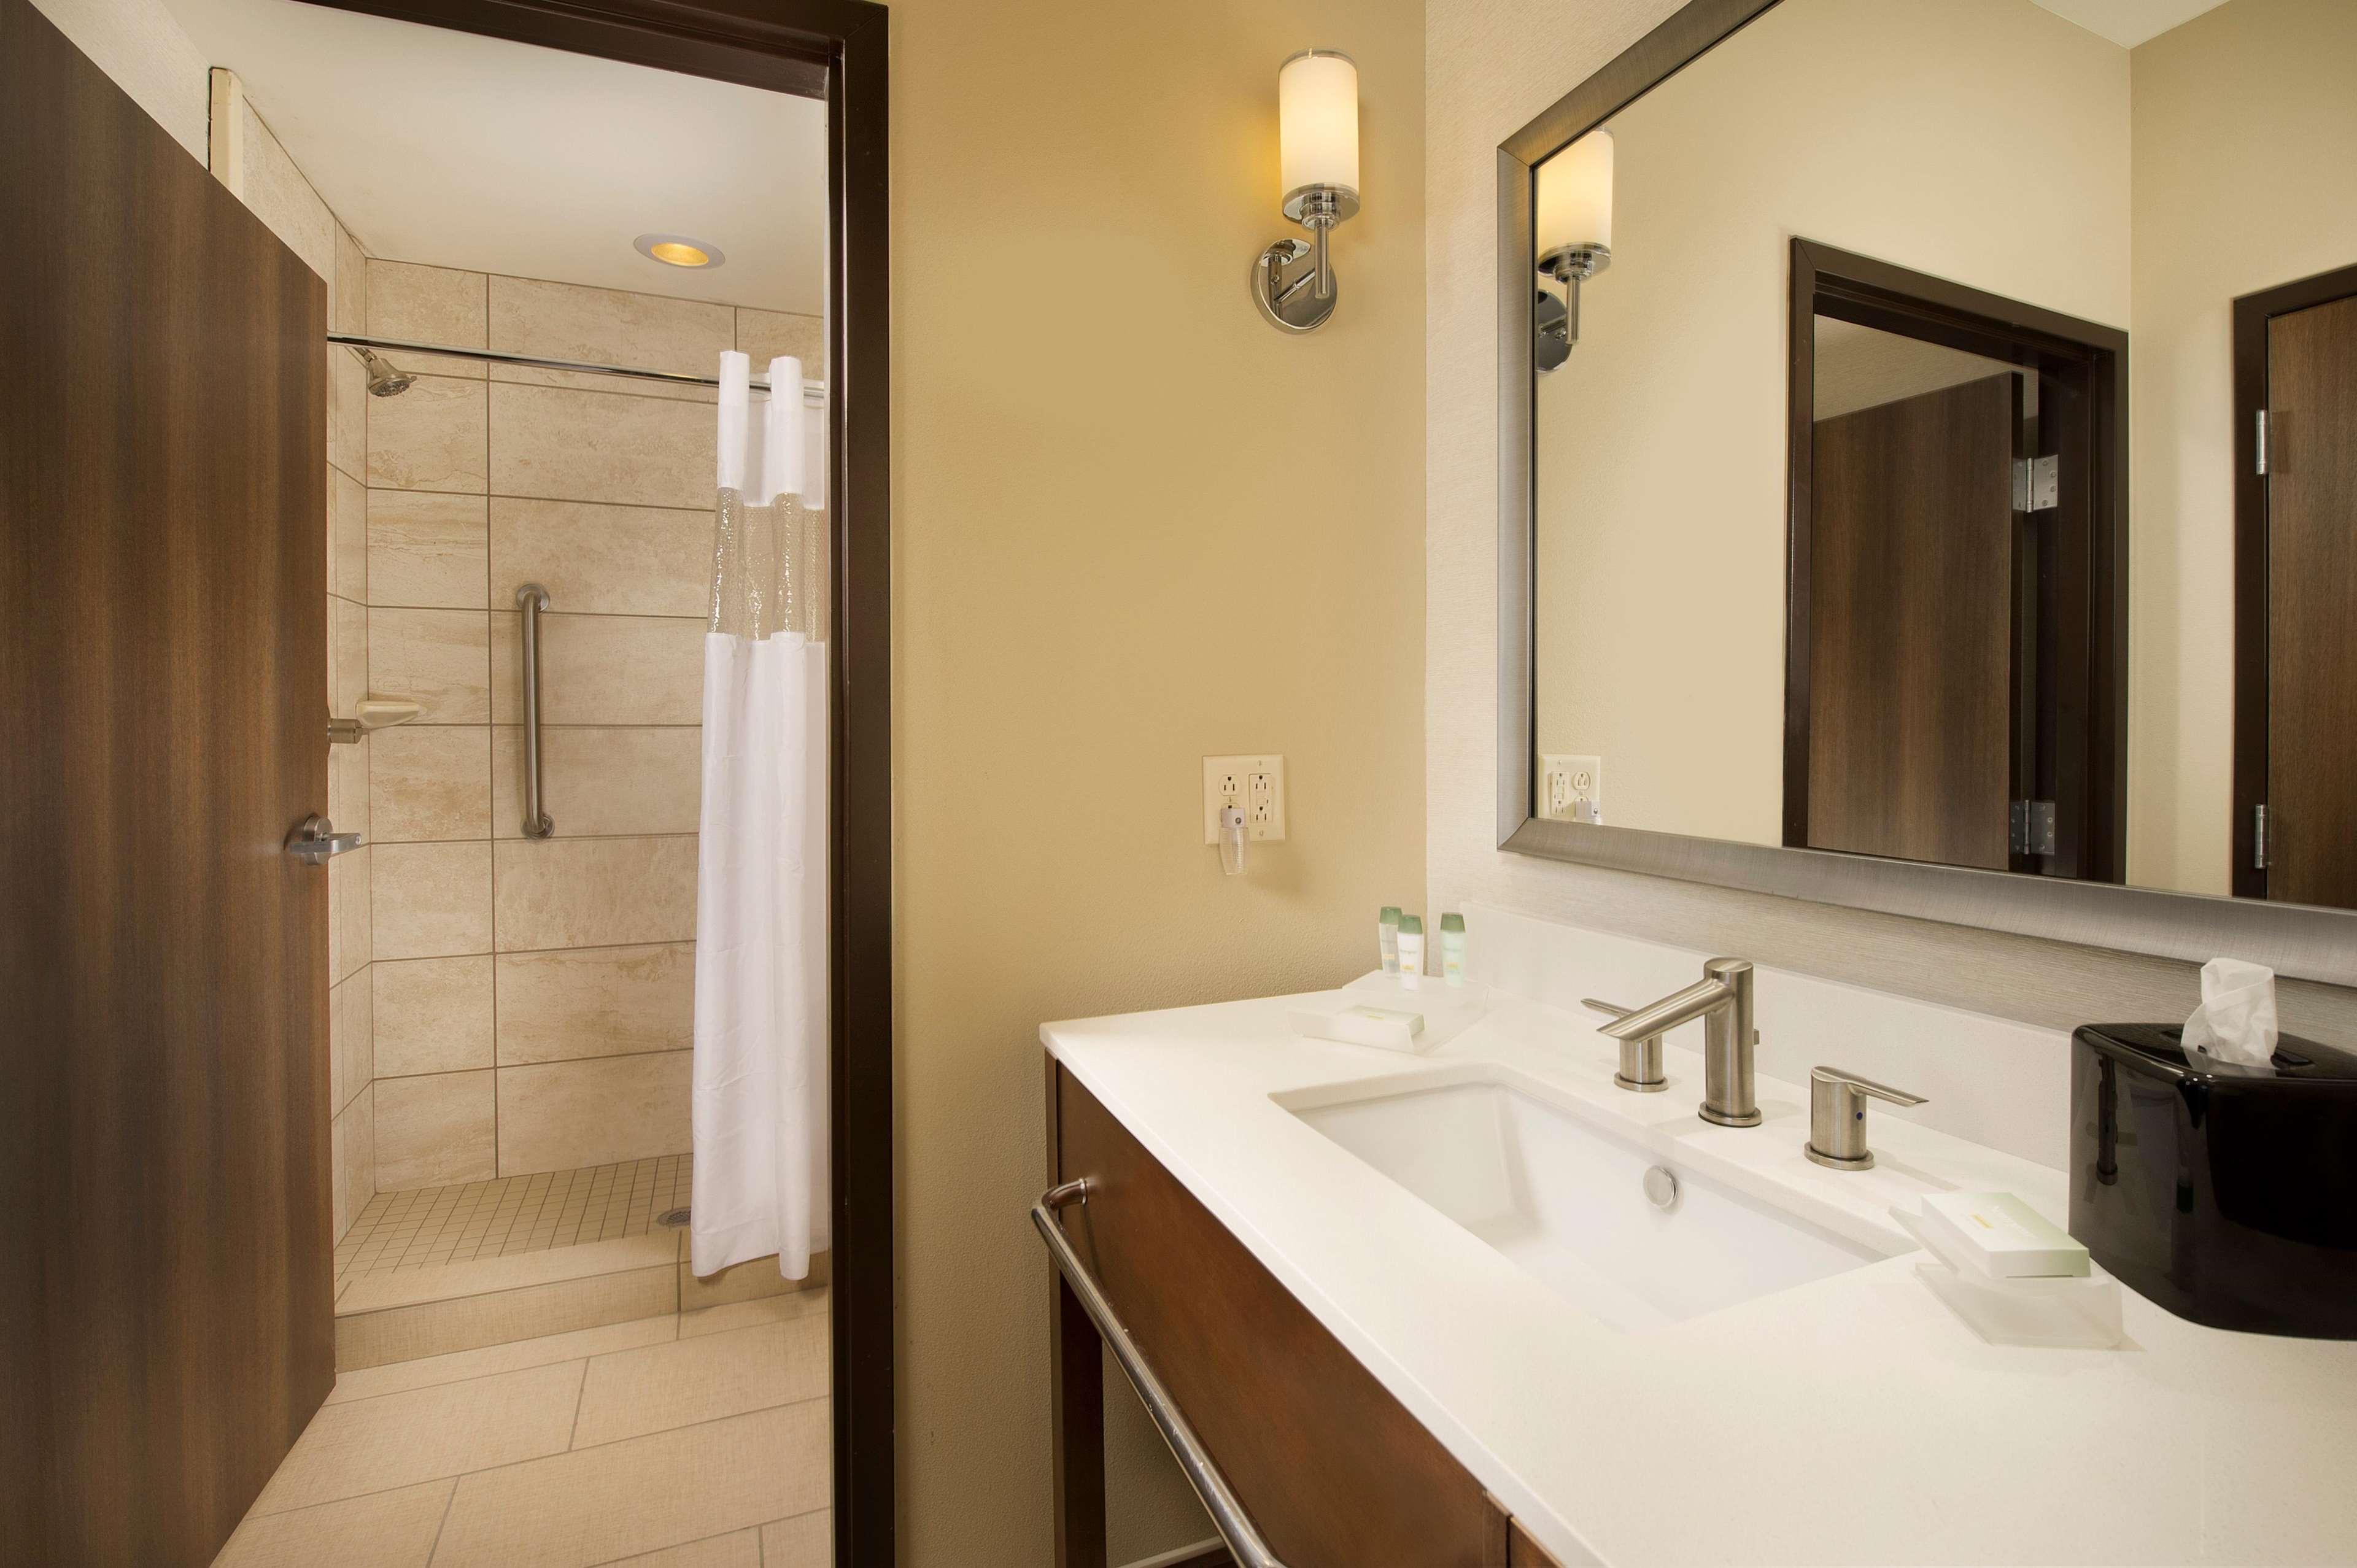 Homewood Suites by Hilton Midland, TX Photo